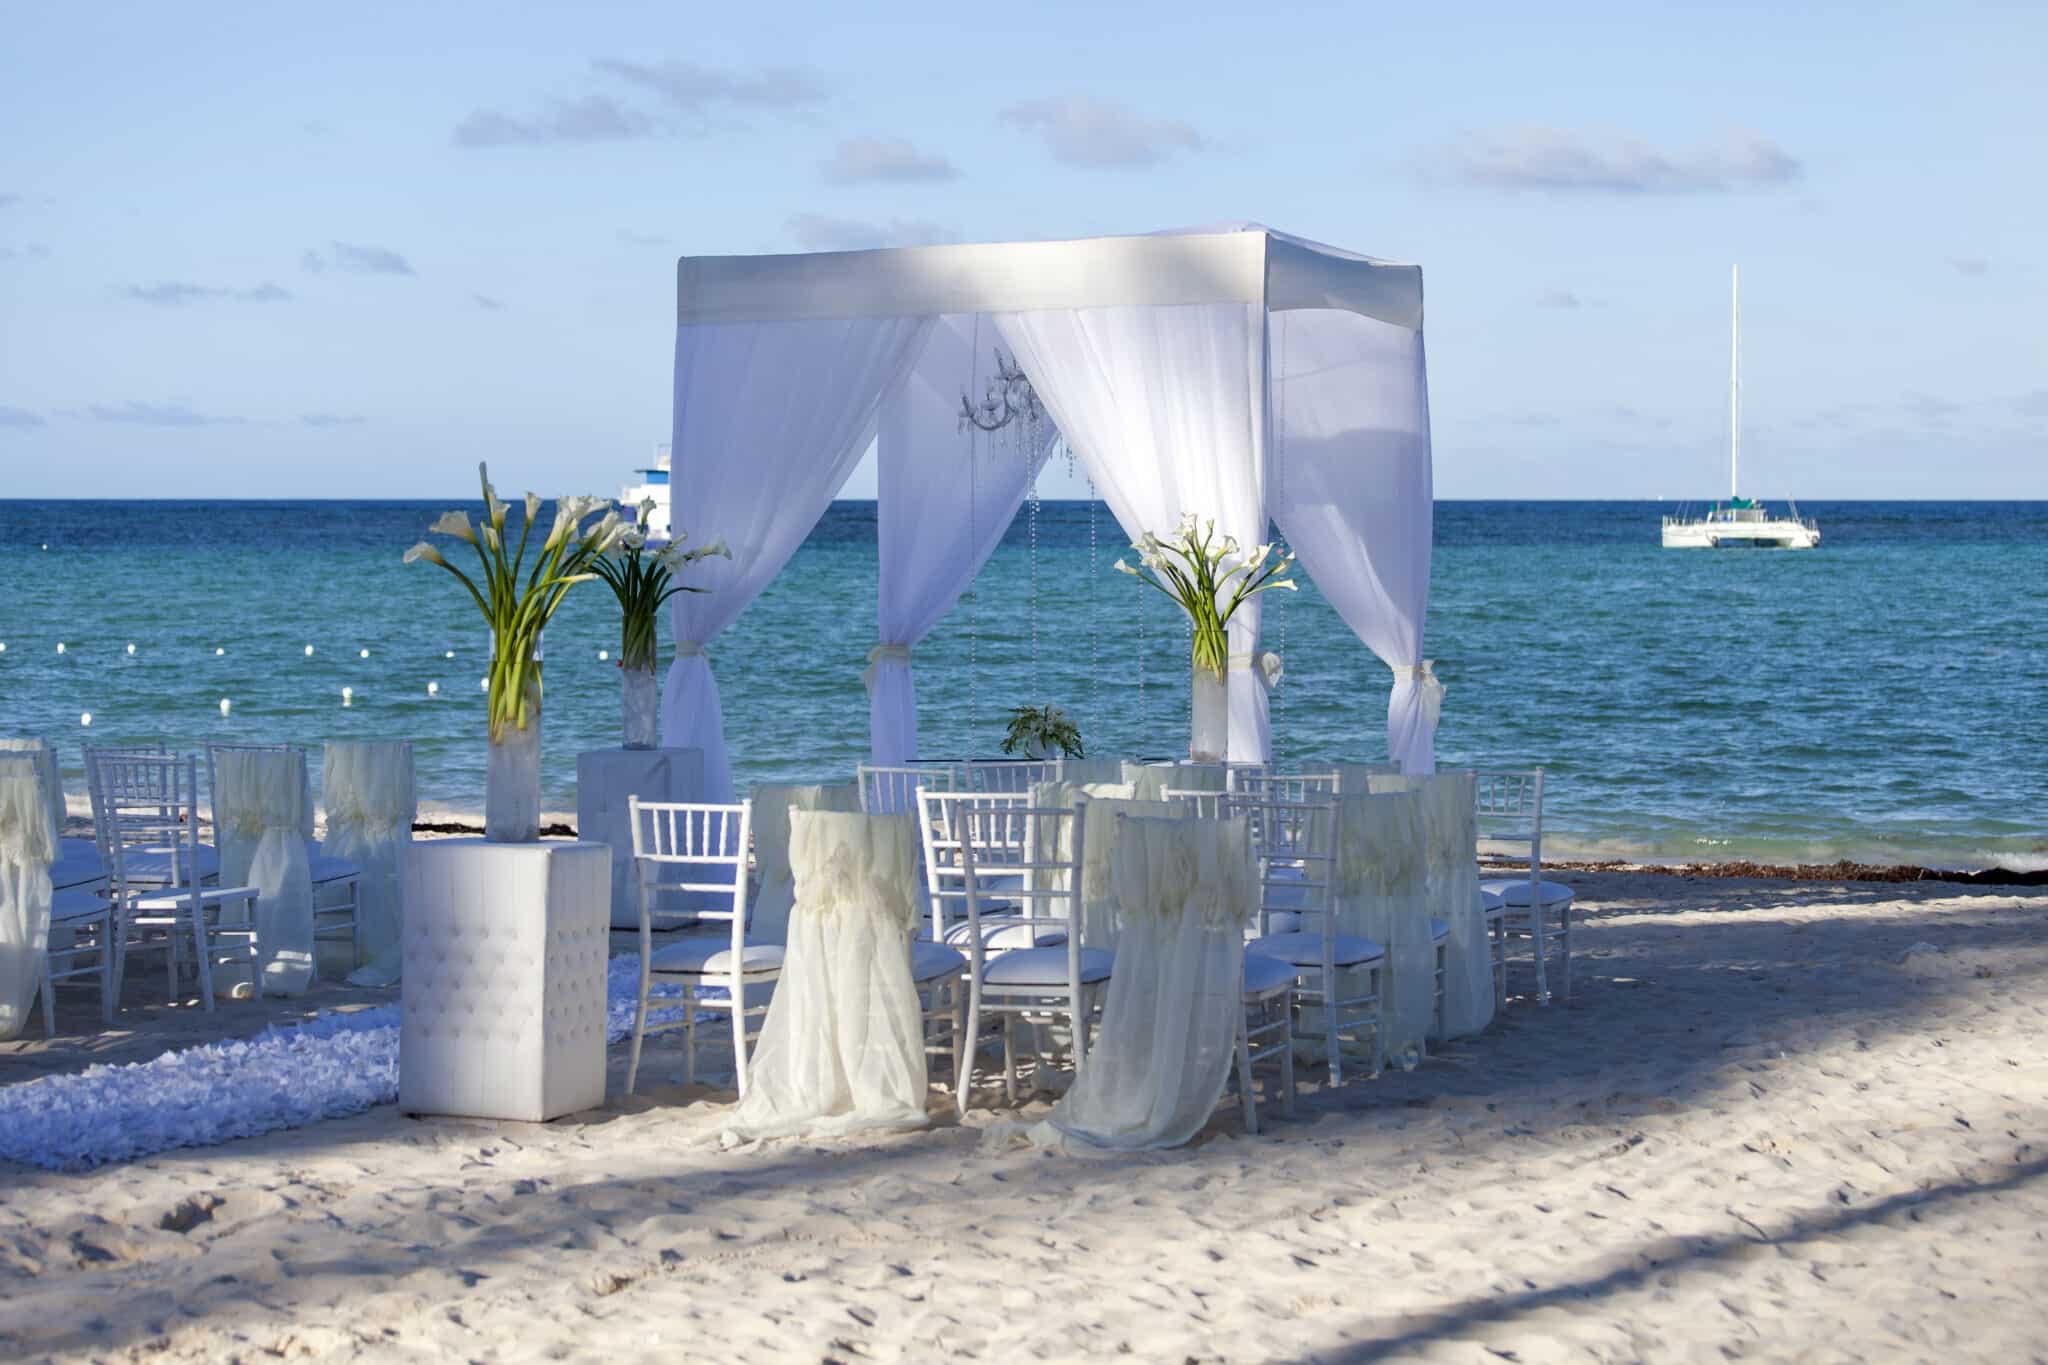 beautiful-wedding-installation-at-the-beach-2022-11-14-05-05-44-utc